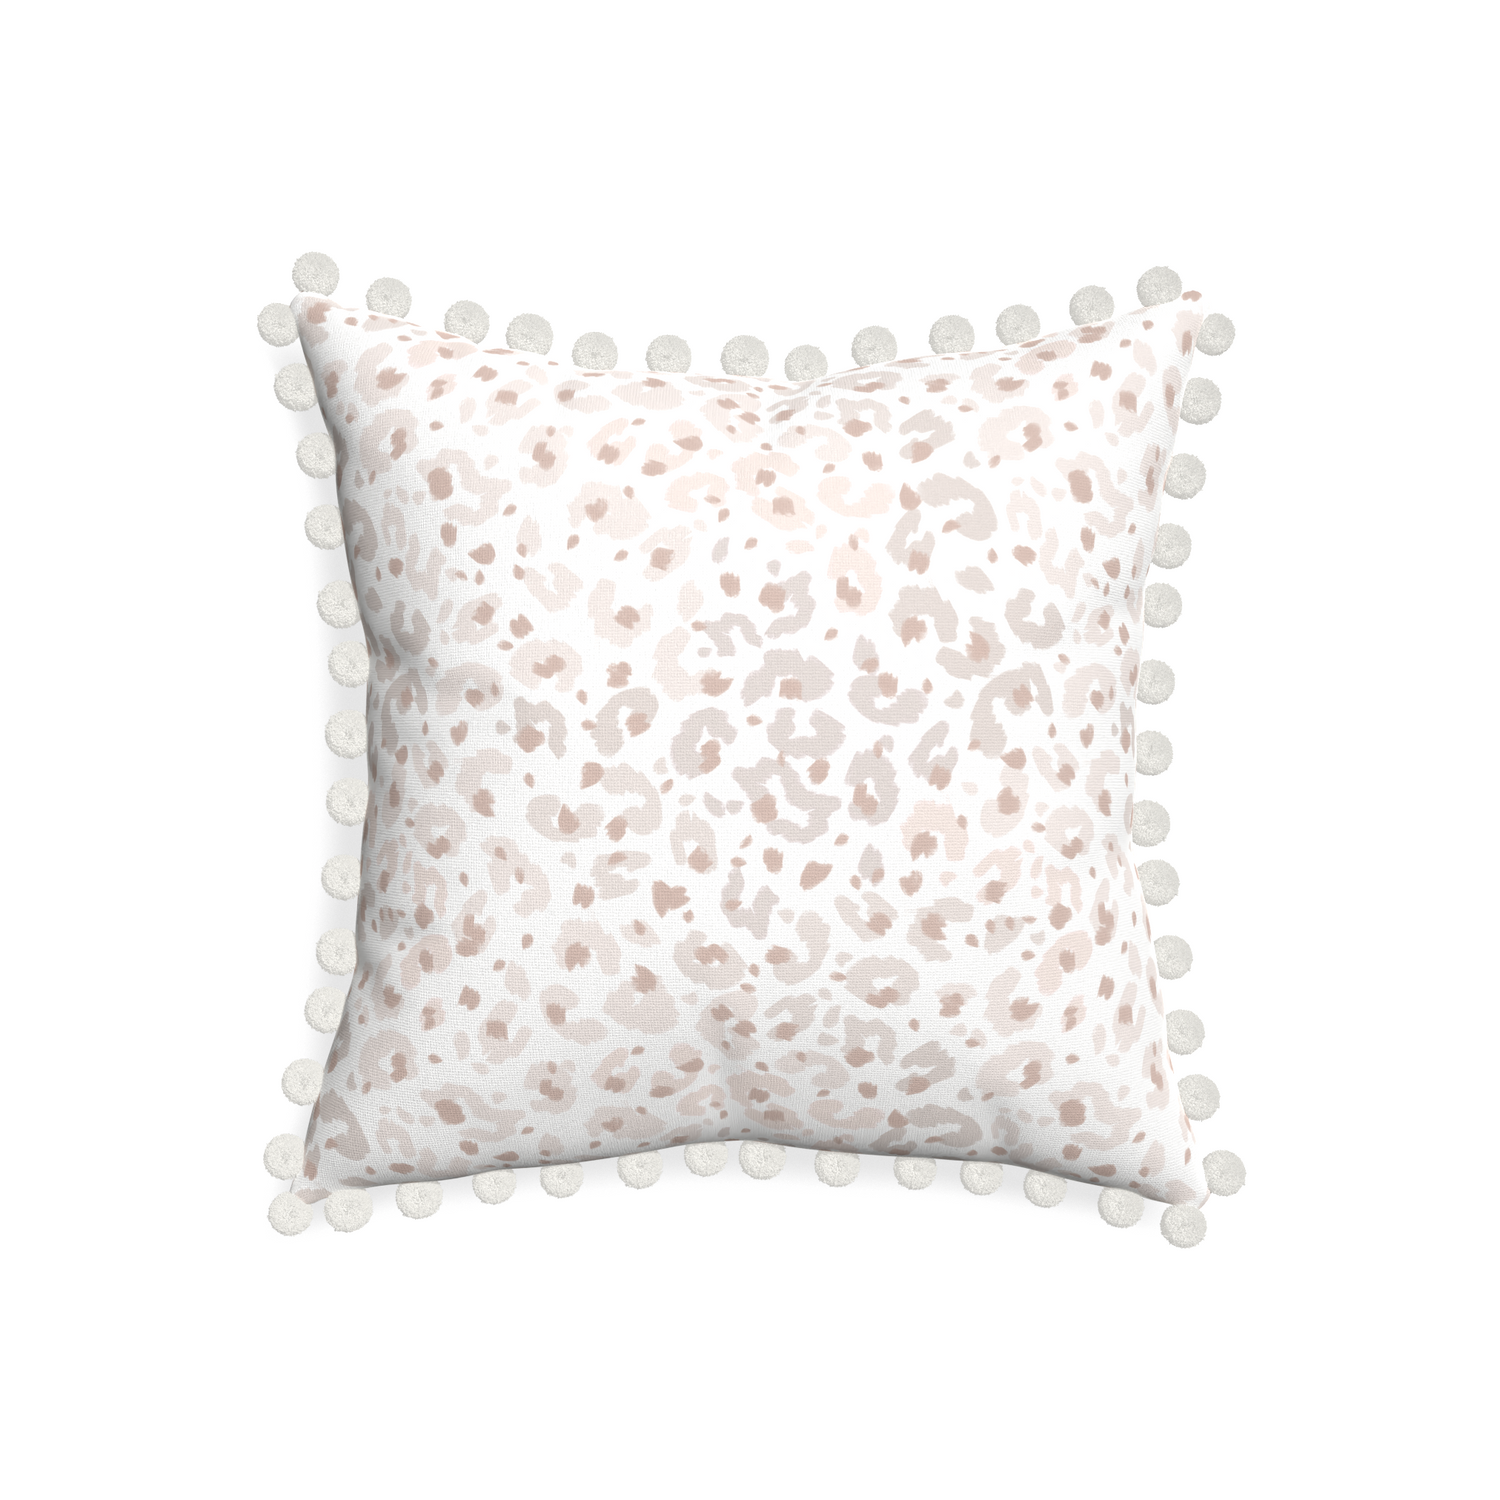 20-square rosie custom pillow with snow pom pom on white background